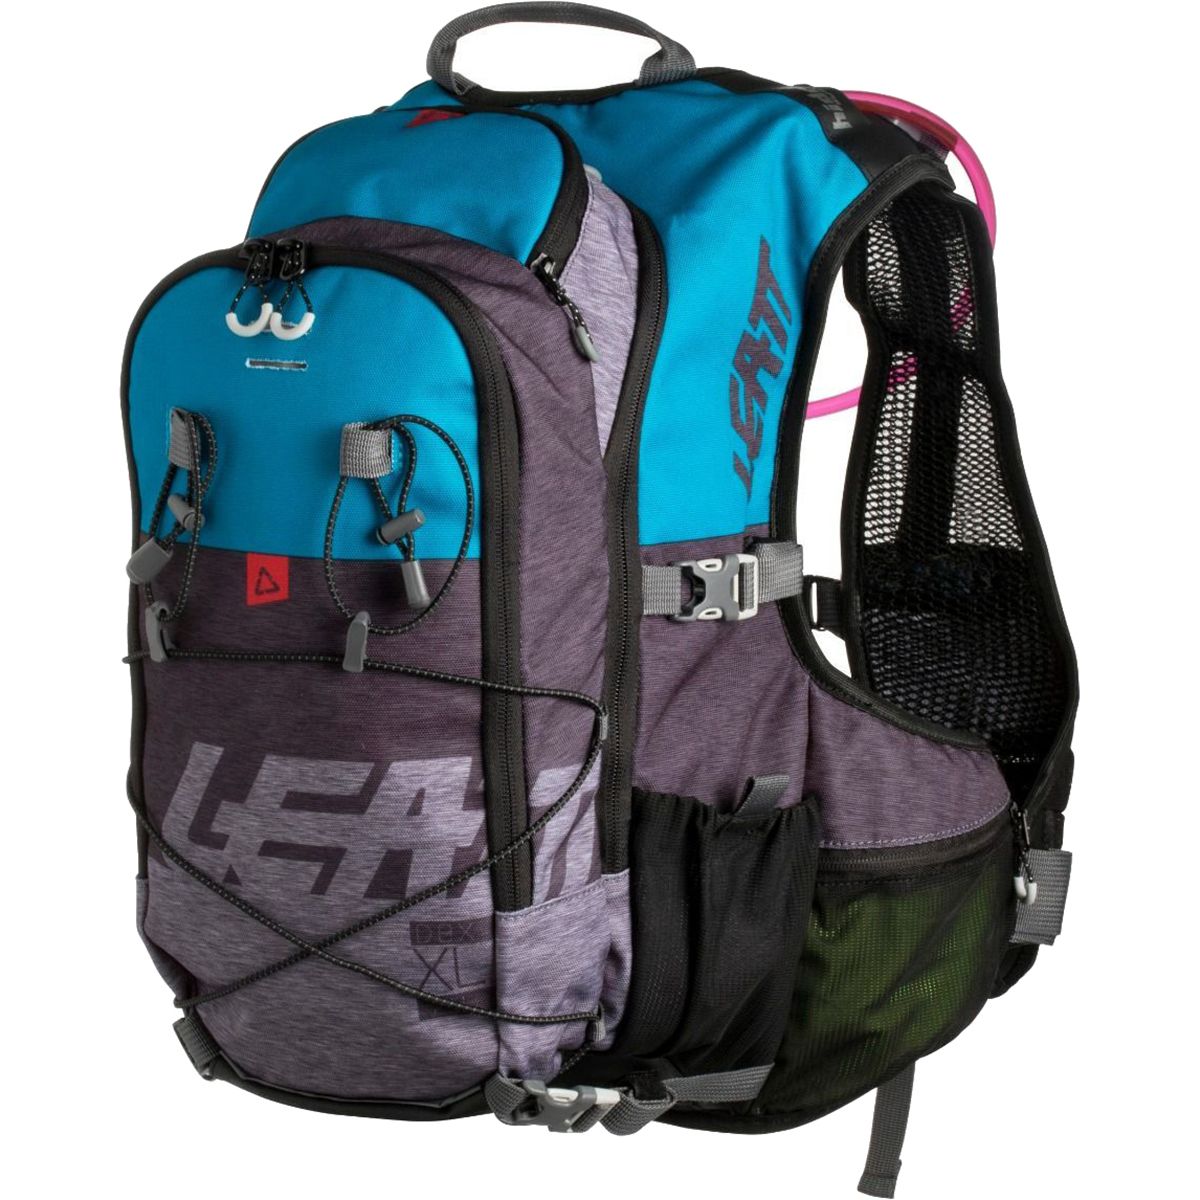 Leatt 2.0 XL DBX 2L Hydration Backpack